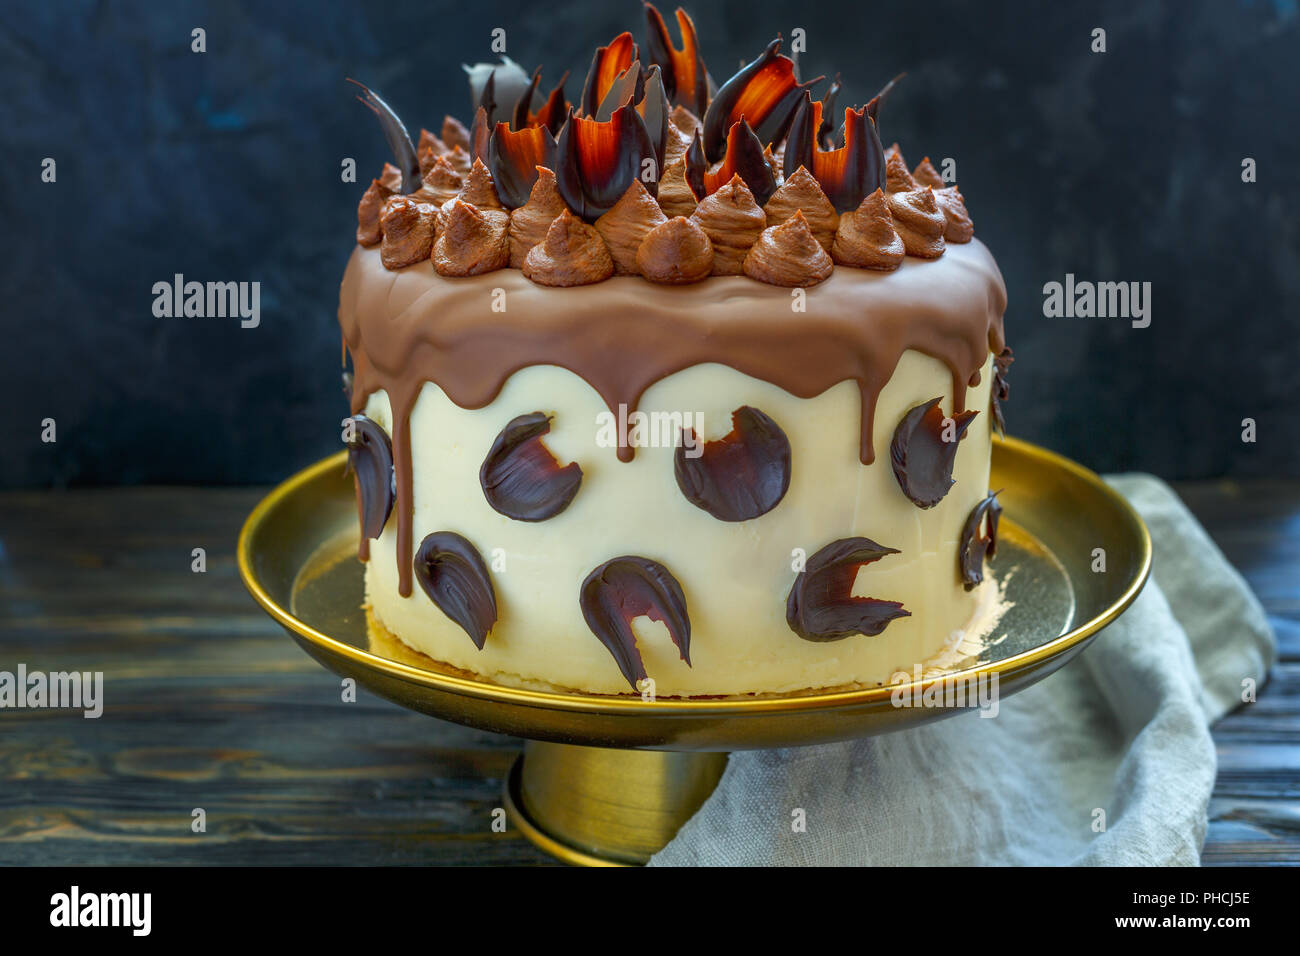 Cake with chocolate decor. Stock Photo